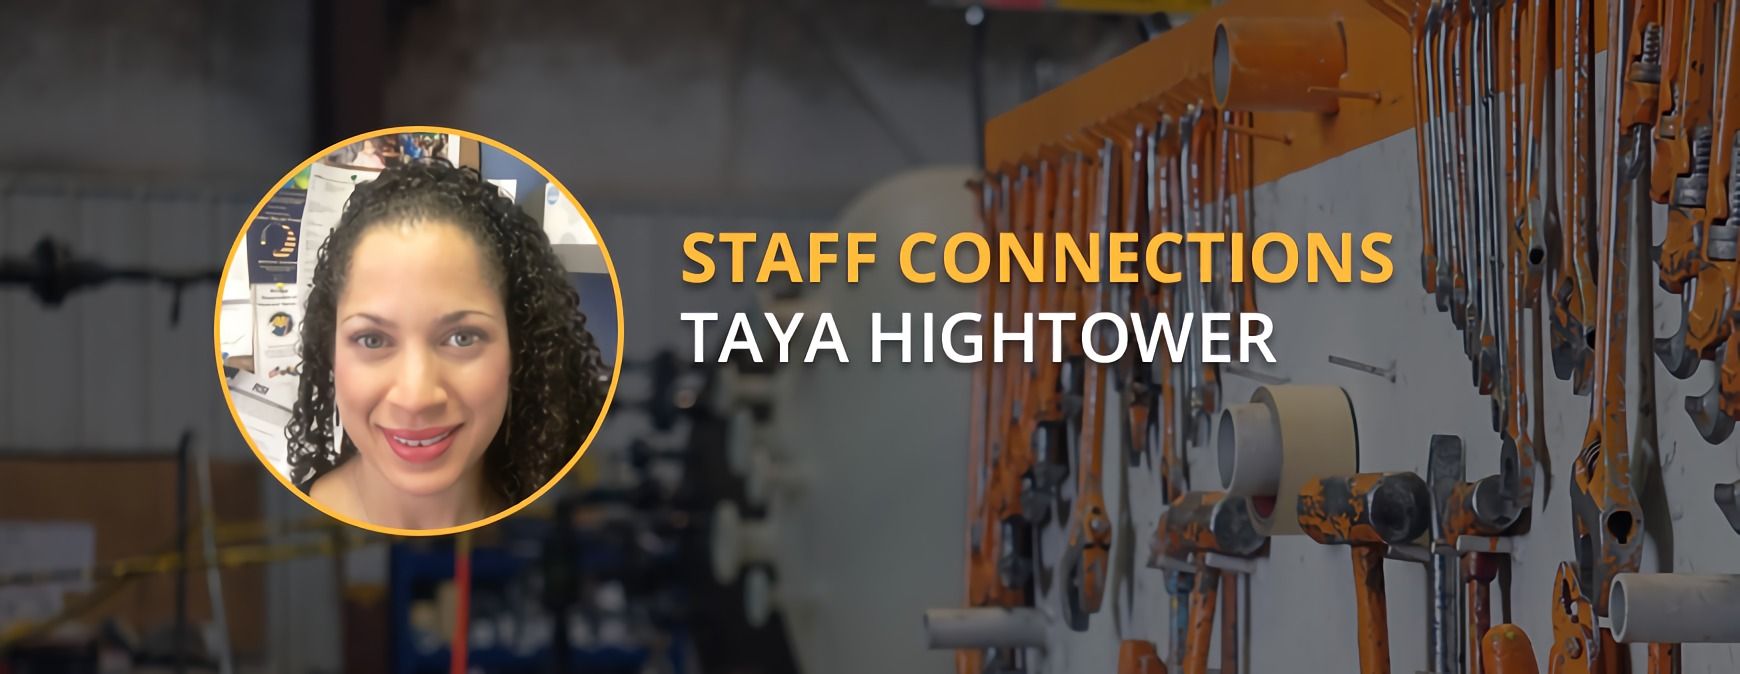 taya hightower staff connections